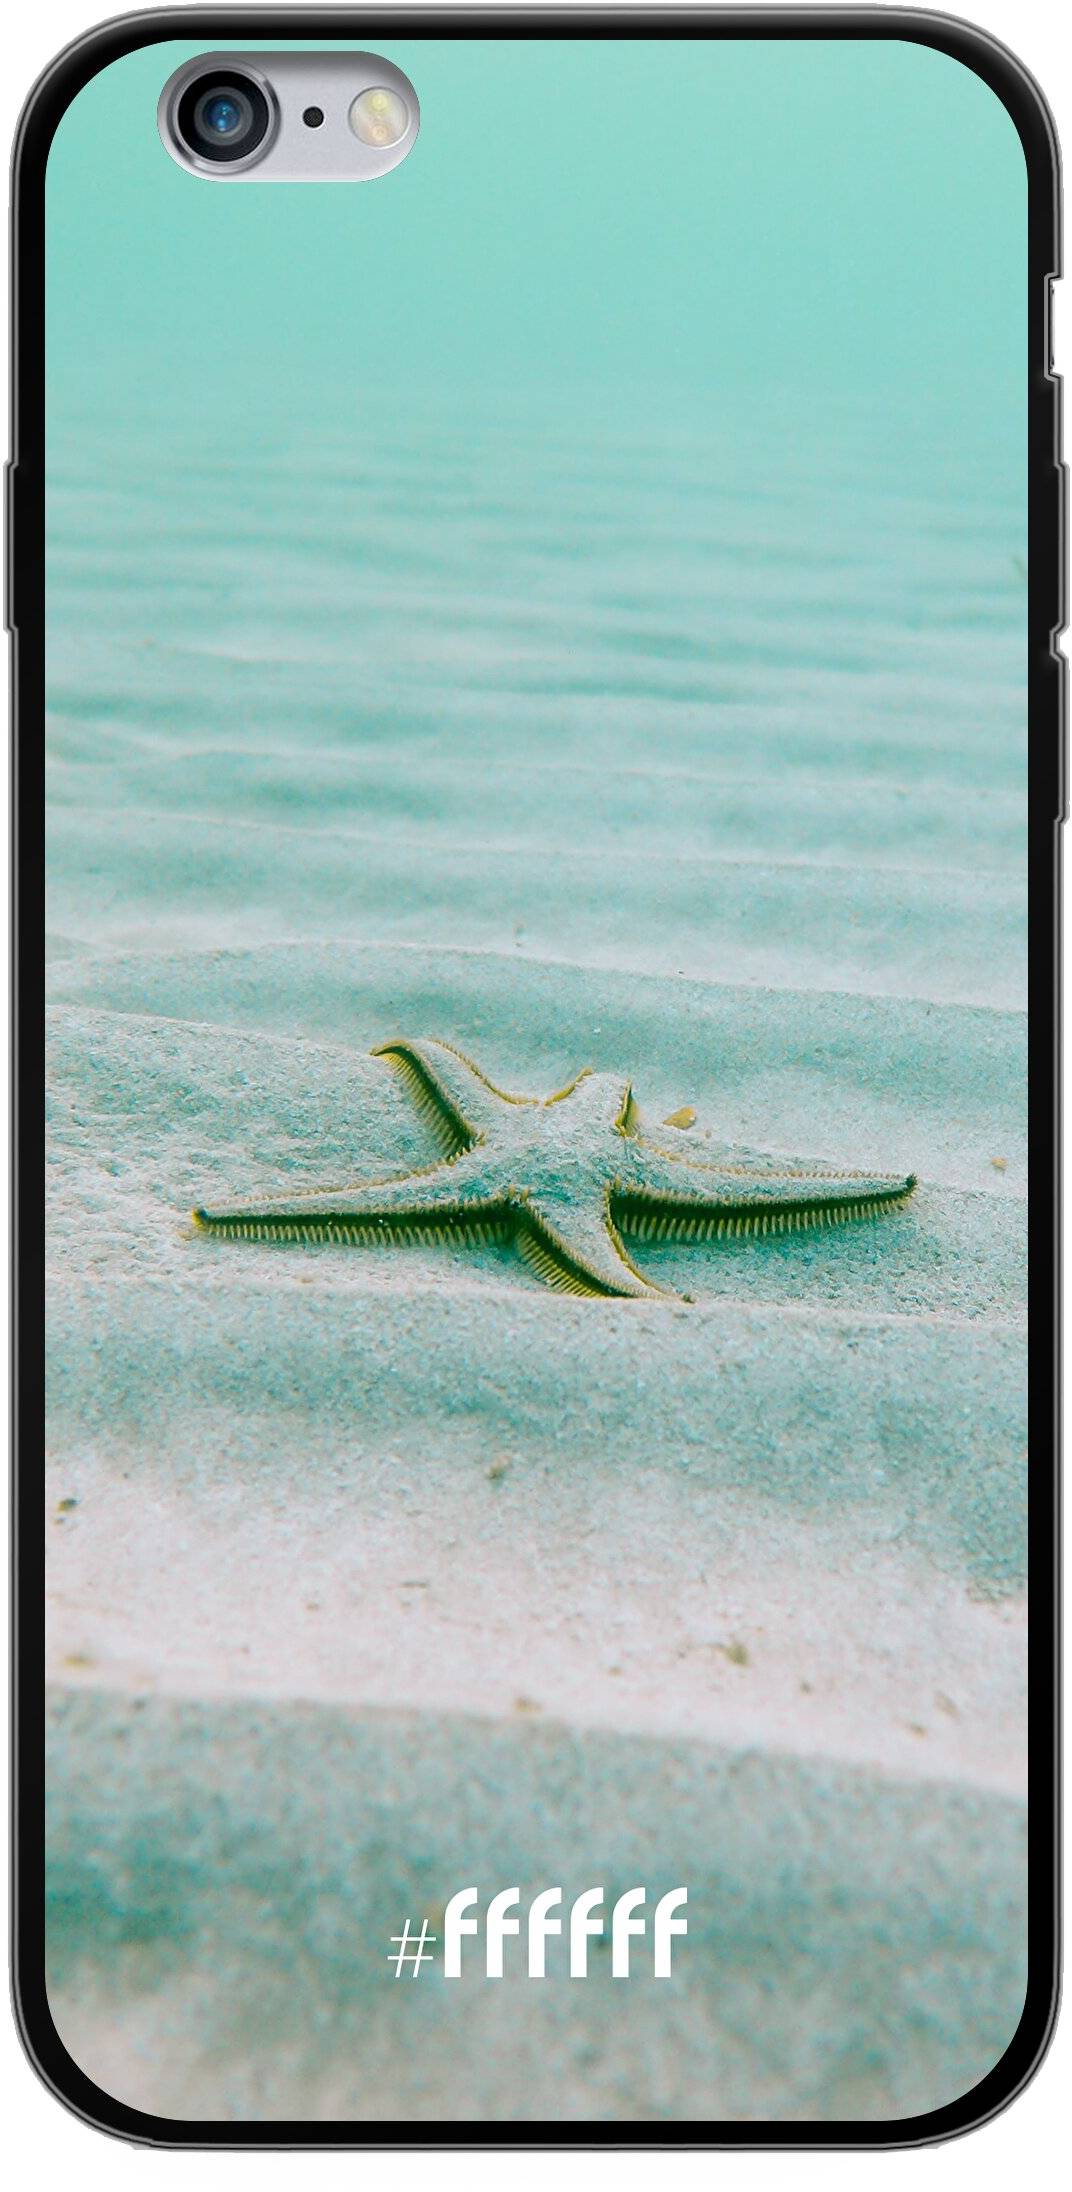 Sea Star iPhone 6s